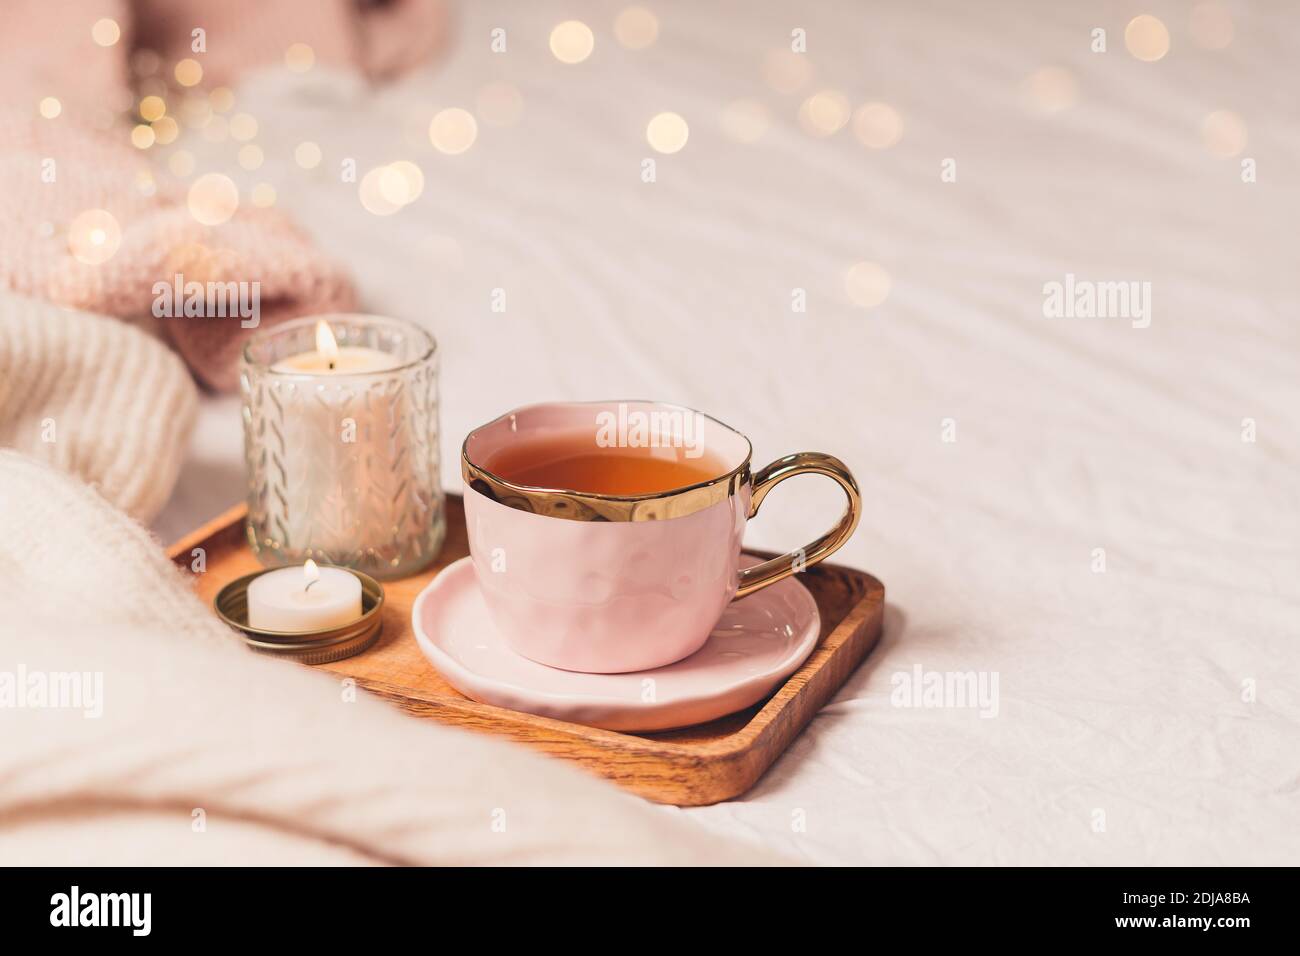 Cup of Tea, Cotton, Cozy, Book, Candle. Cosy Autumn Winter Concept